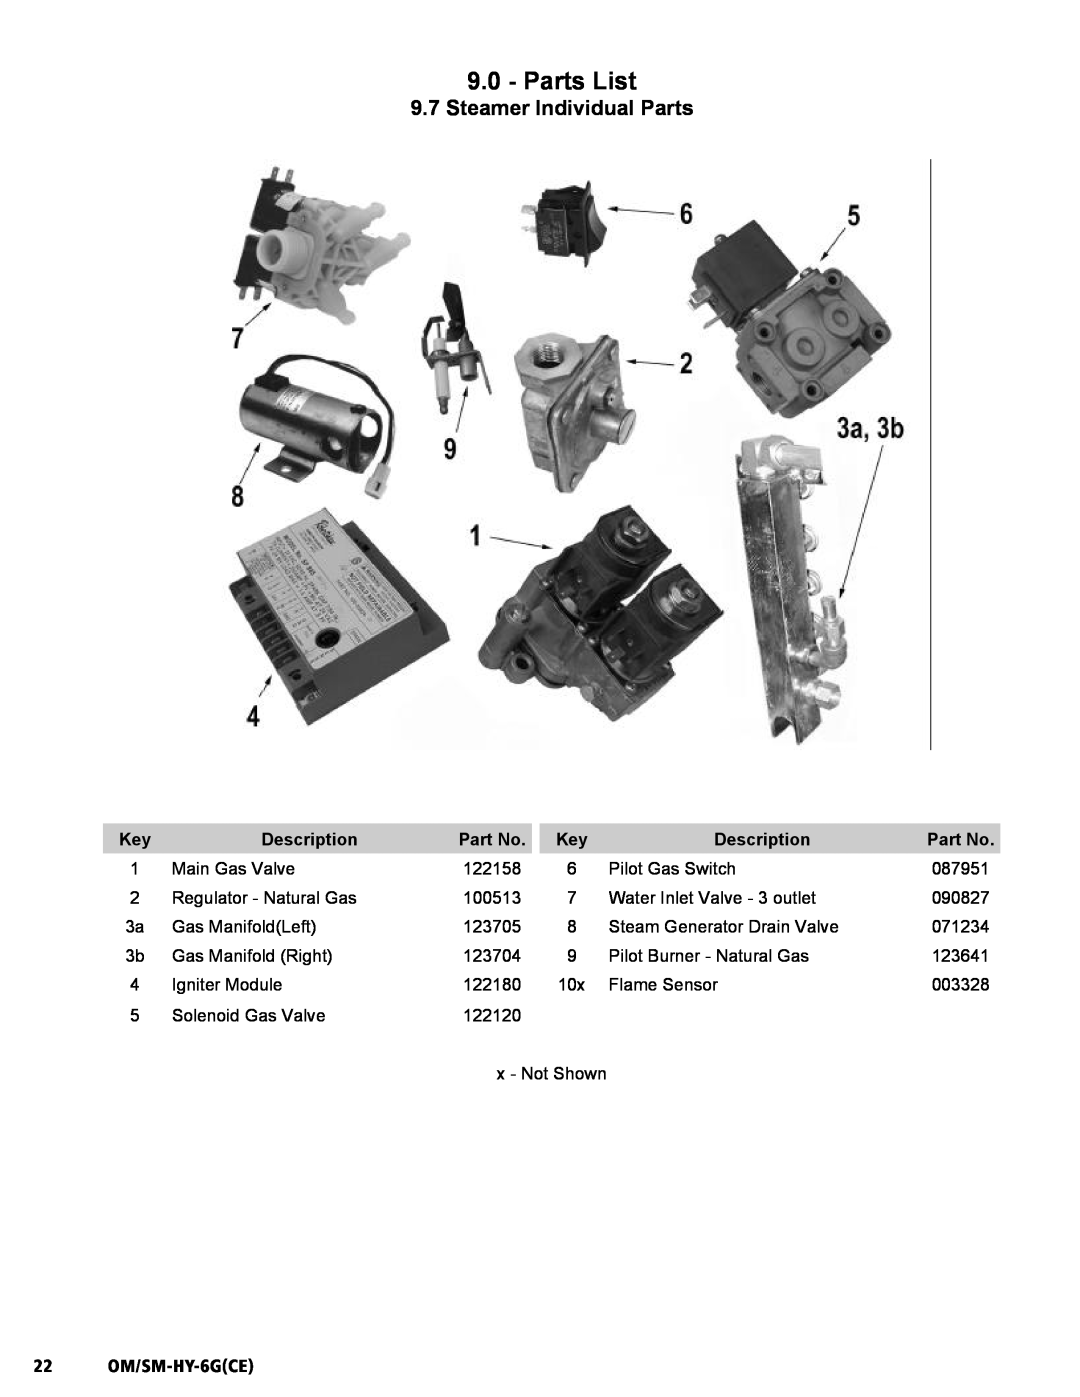 Unified Brands HY-6G(CE) service manual 9.7Steamer Individual Parts, Parts List, Description, 22 OM/SM-HY-6GCE 